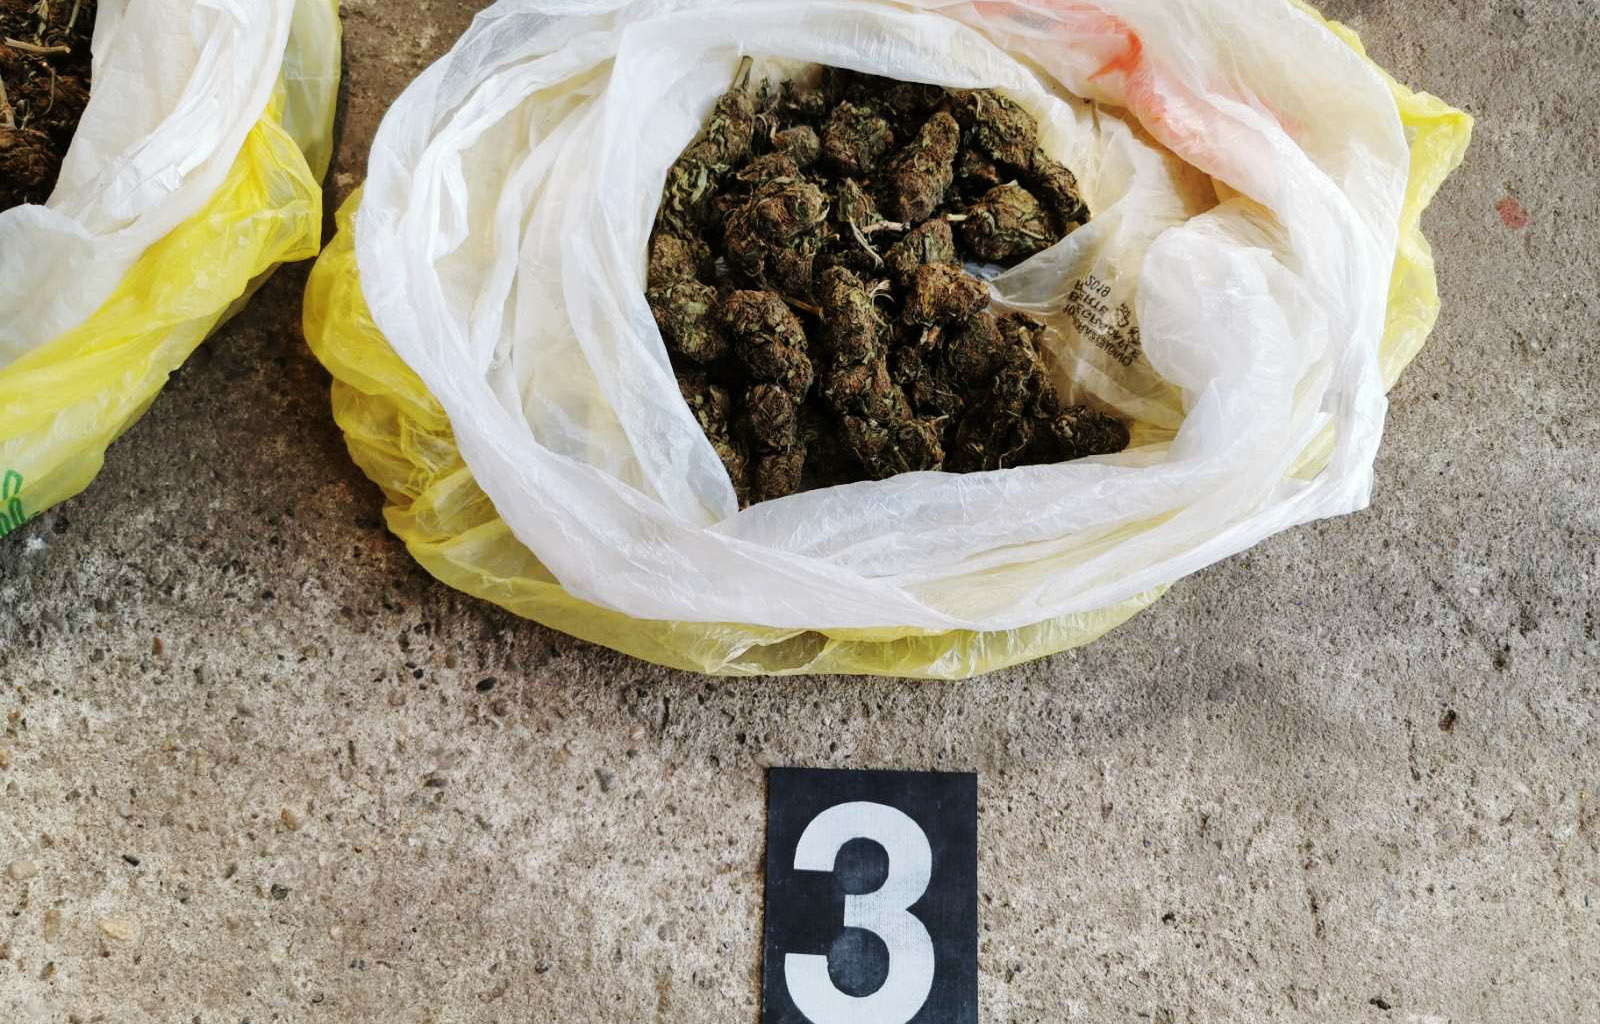 Zaplenjeno 3,2 kilograma marihuane